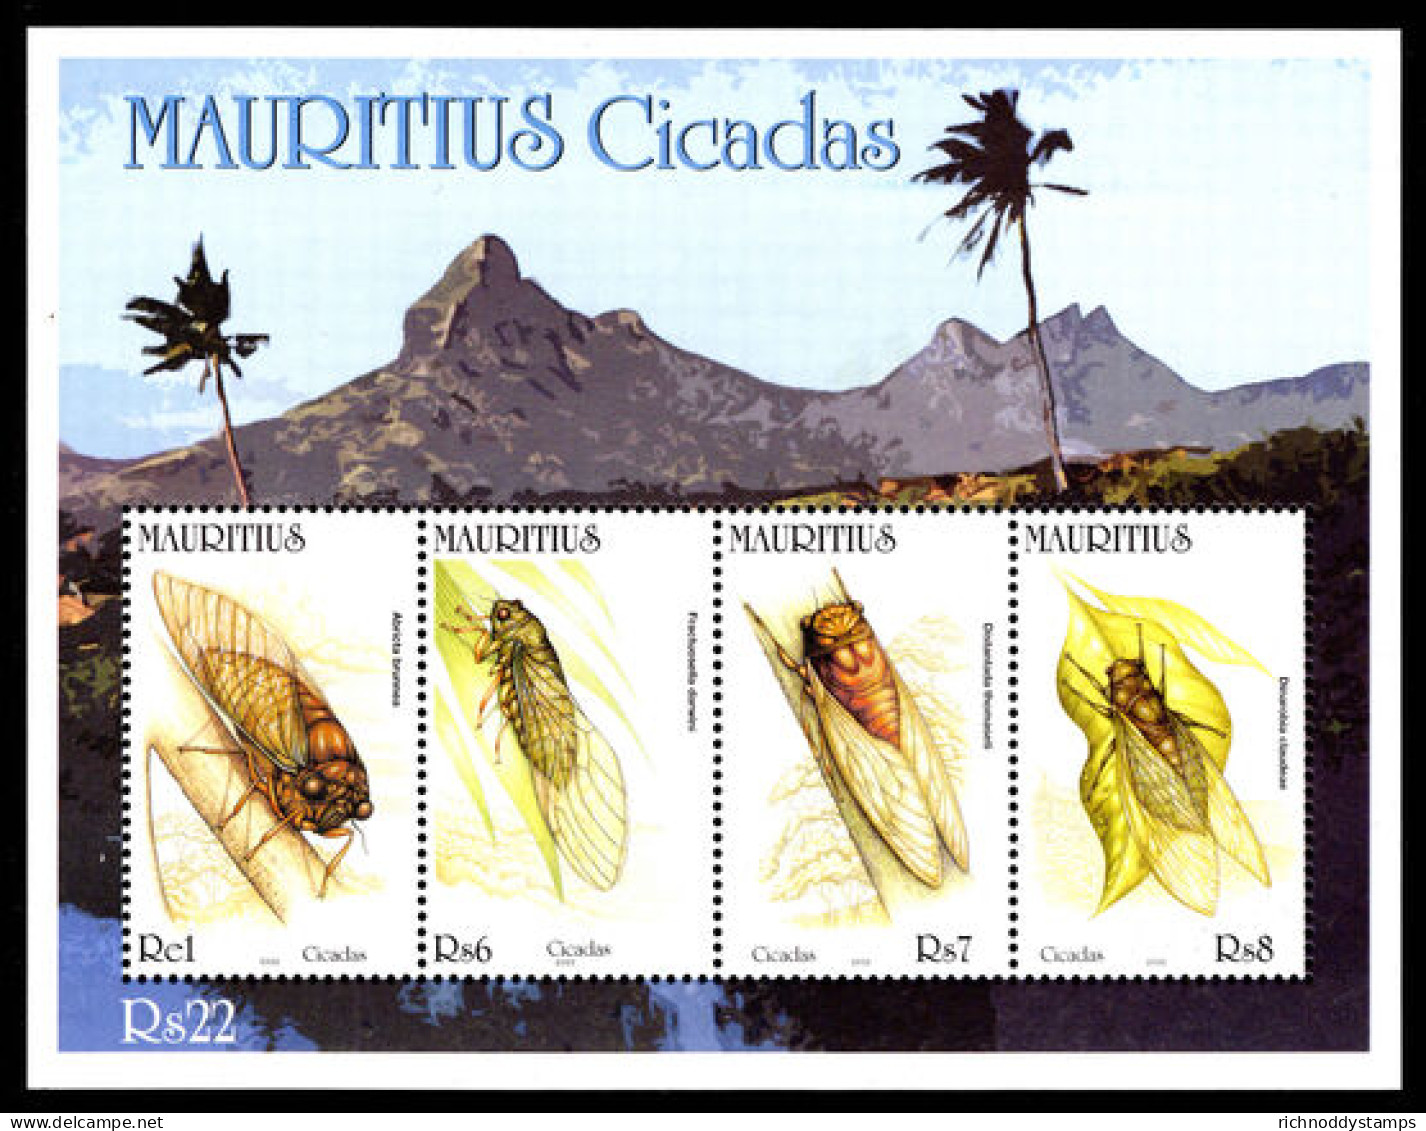 Mauritius 2002 Cicadas Souvenir Sheet Unmounted Mint. - Mauritius (1968-...)